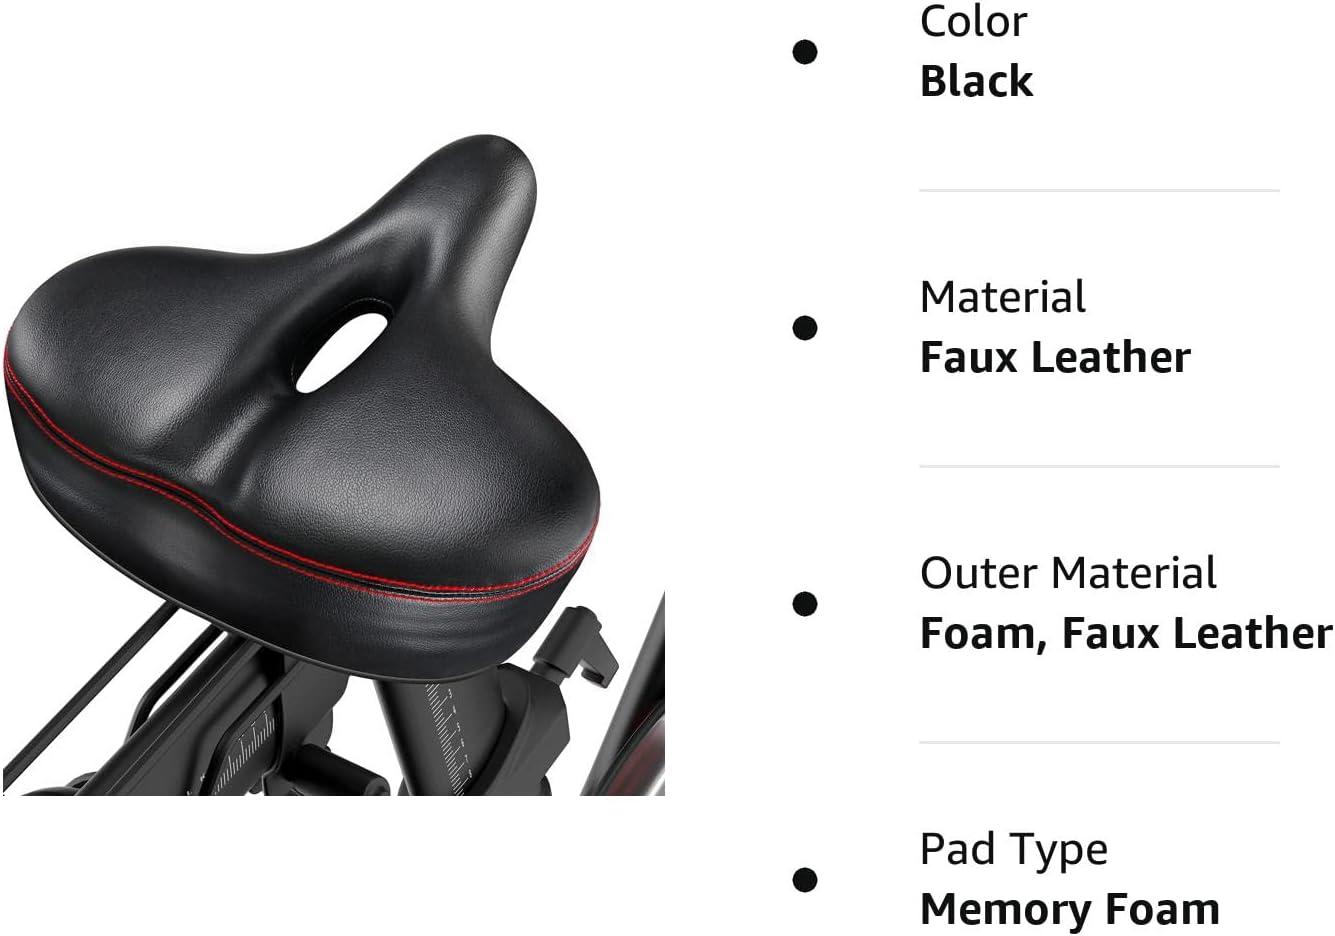 Saddle Padded, Leather color Black